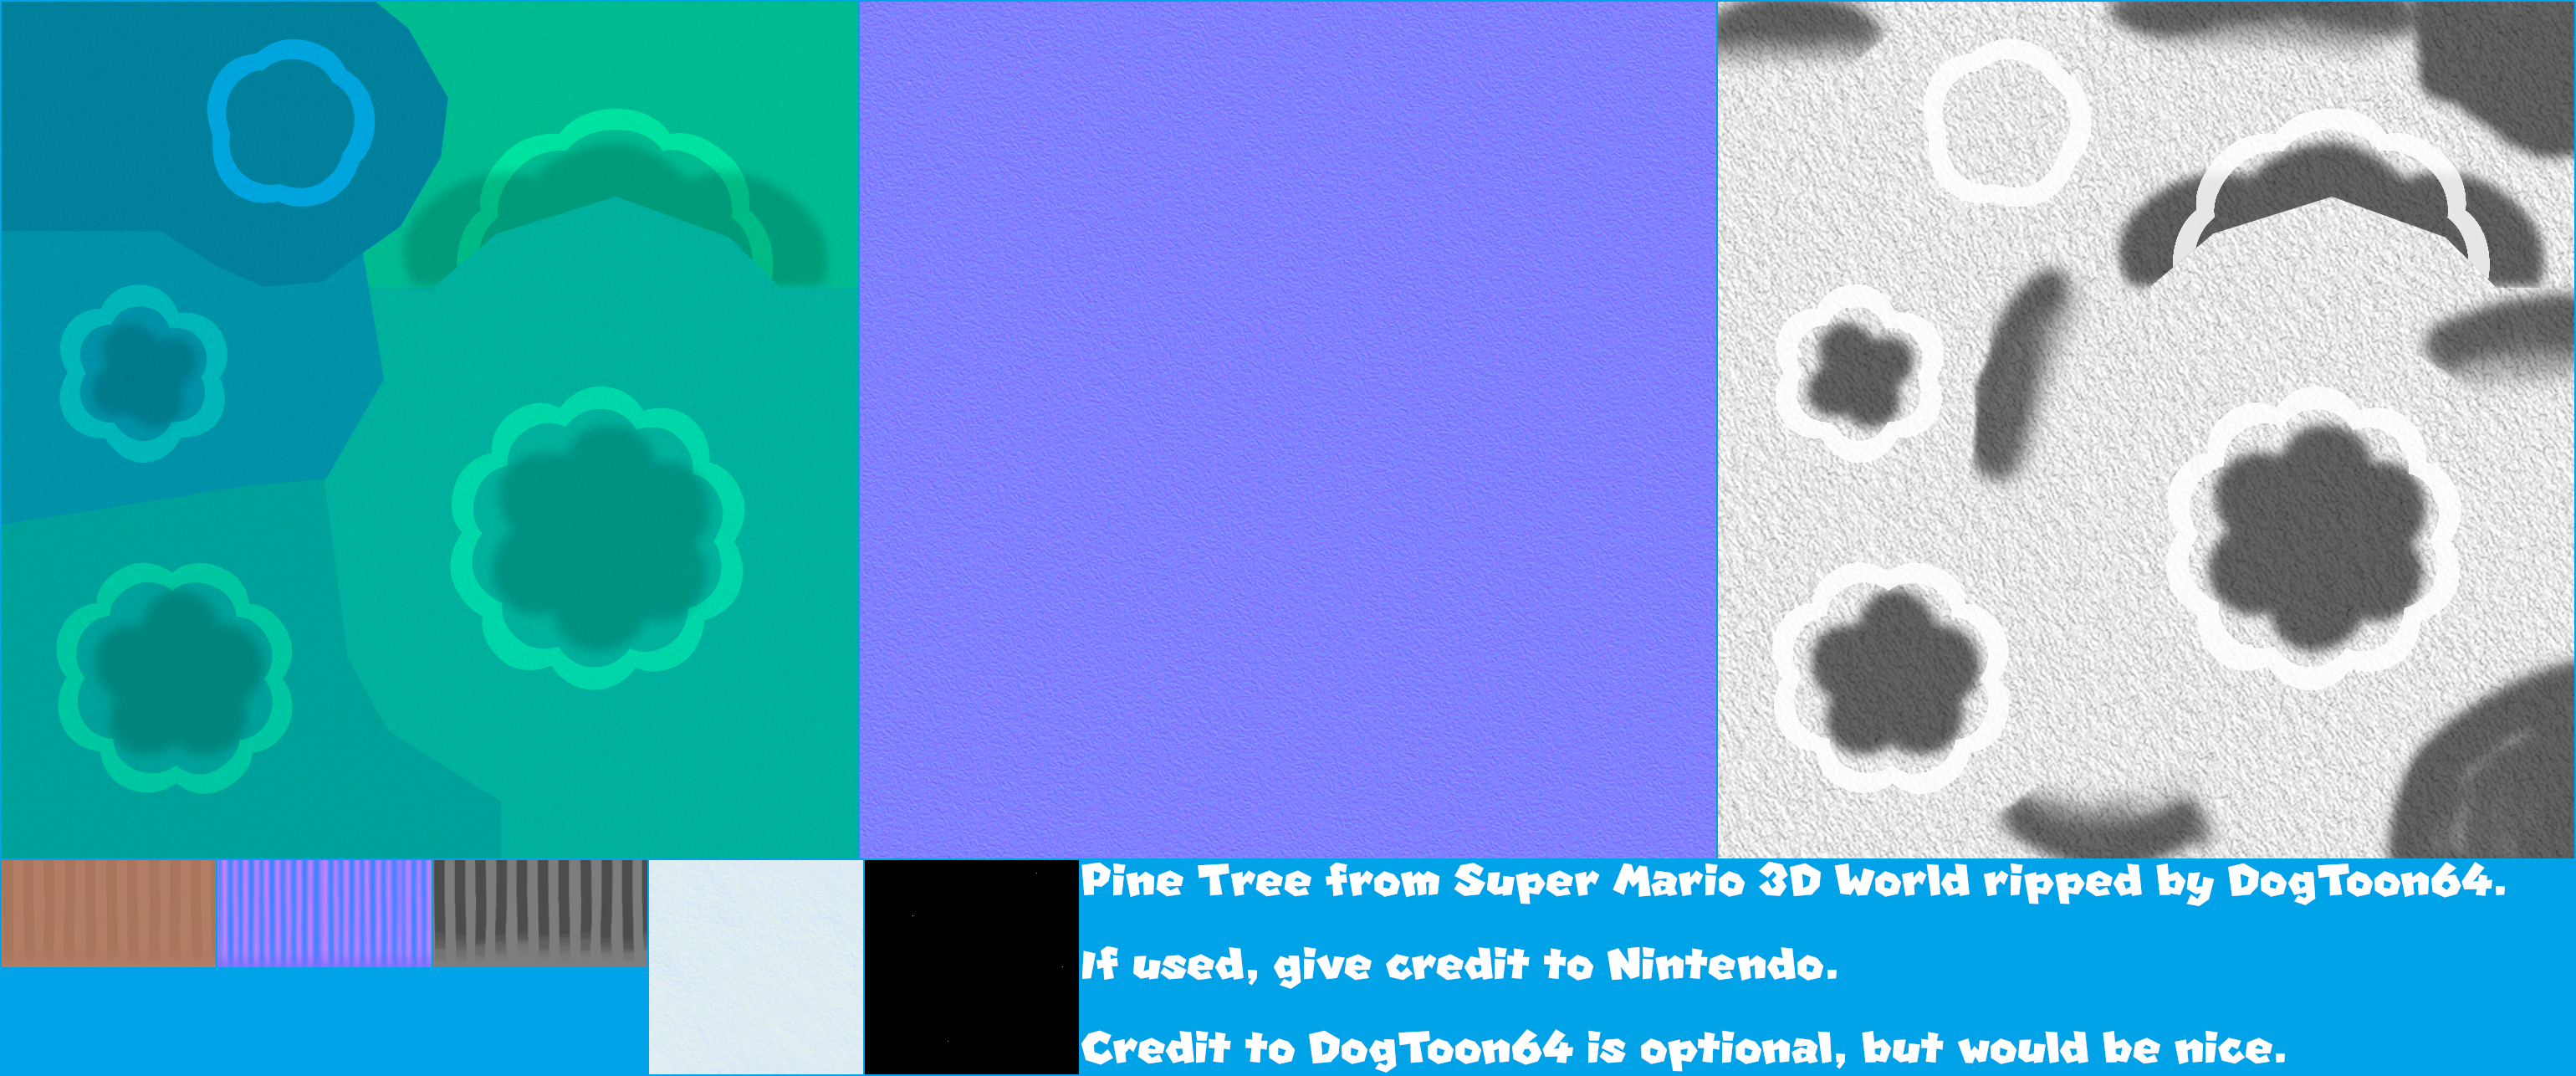 Super Mario 3D World - Pine Tree